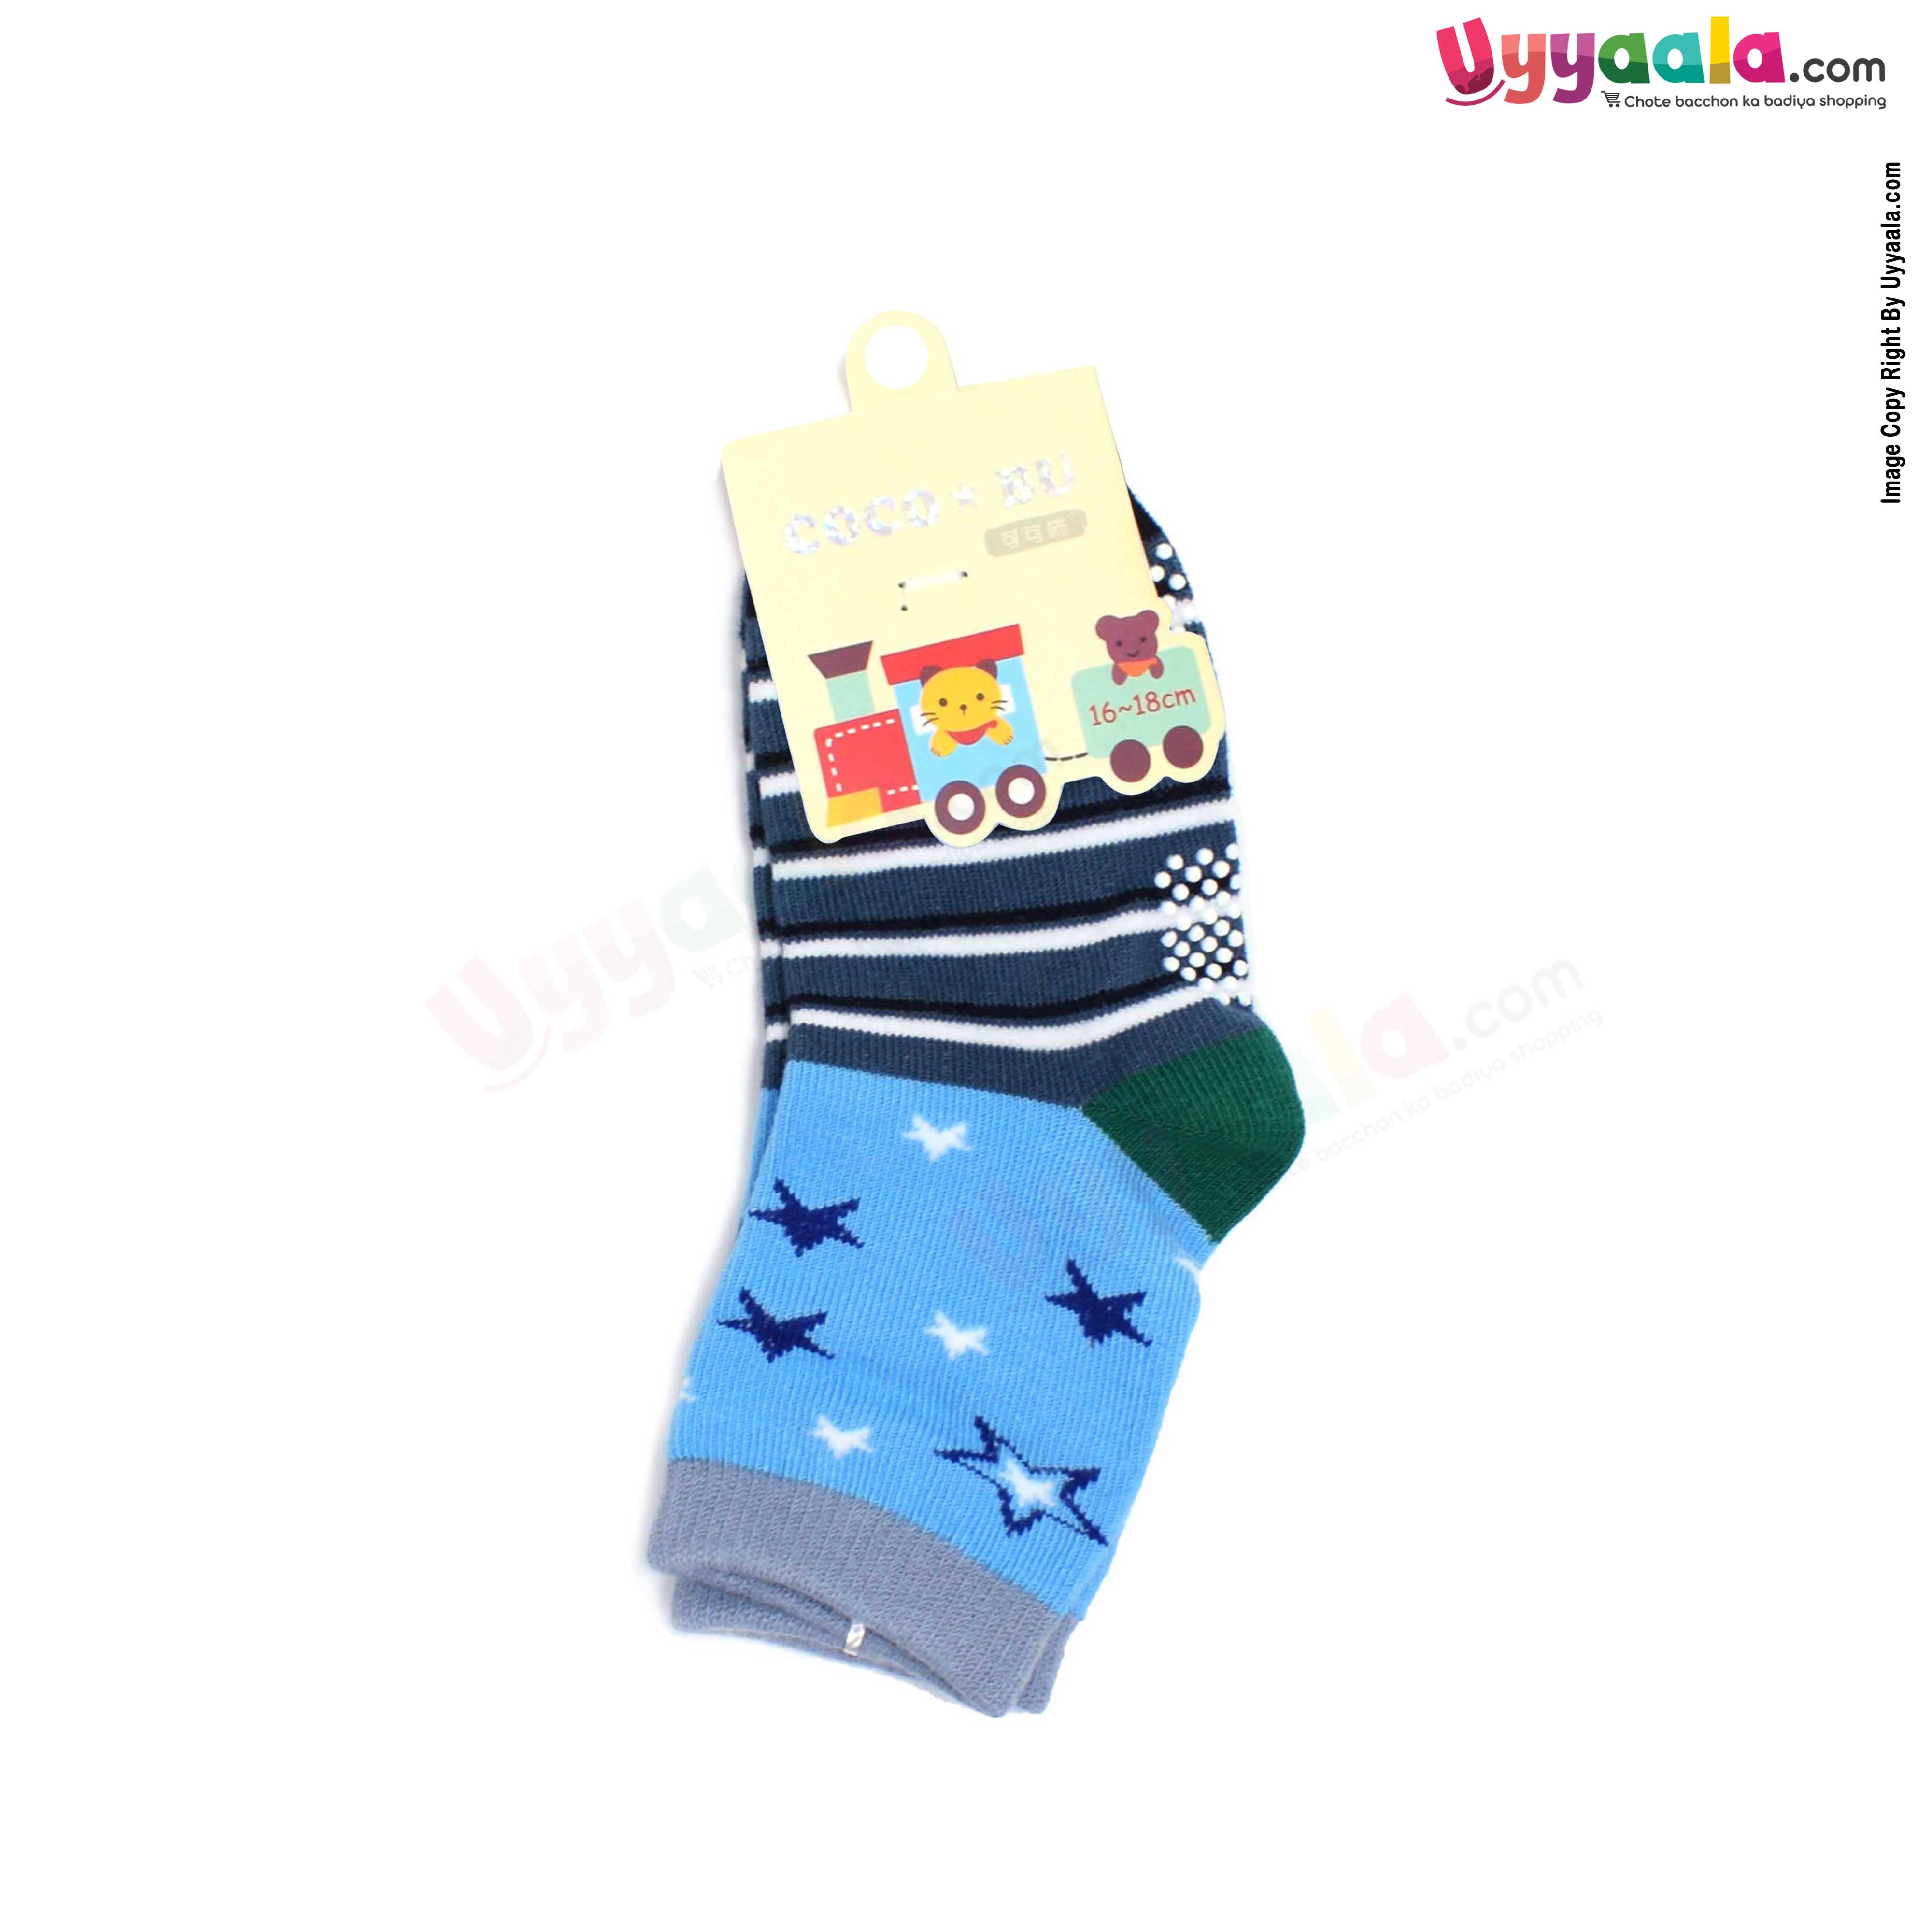 COCO BU Grip Socks Boy With Star Print (16-18cm) - Sky Blue & Green